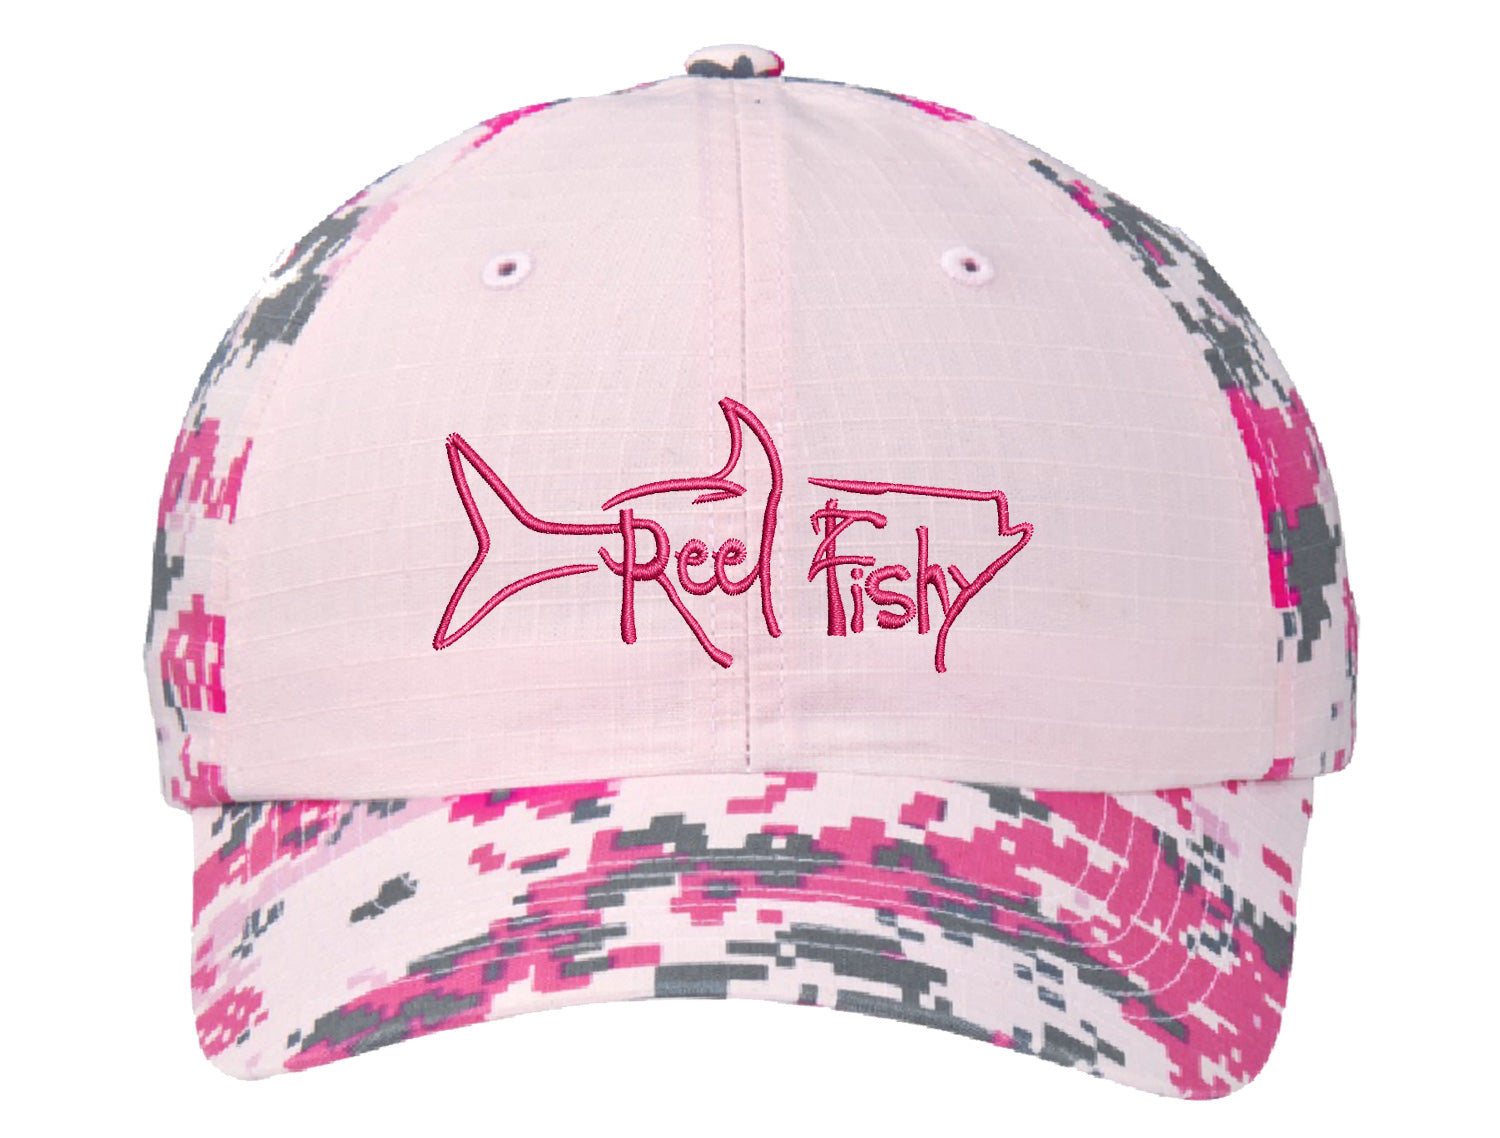 Tarpon Fishing Hats, Baseball Cap, Dad Hat, Camo Hat - *8 Colors! Tan Camo-Orange Logo